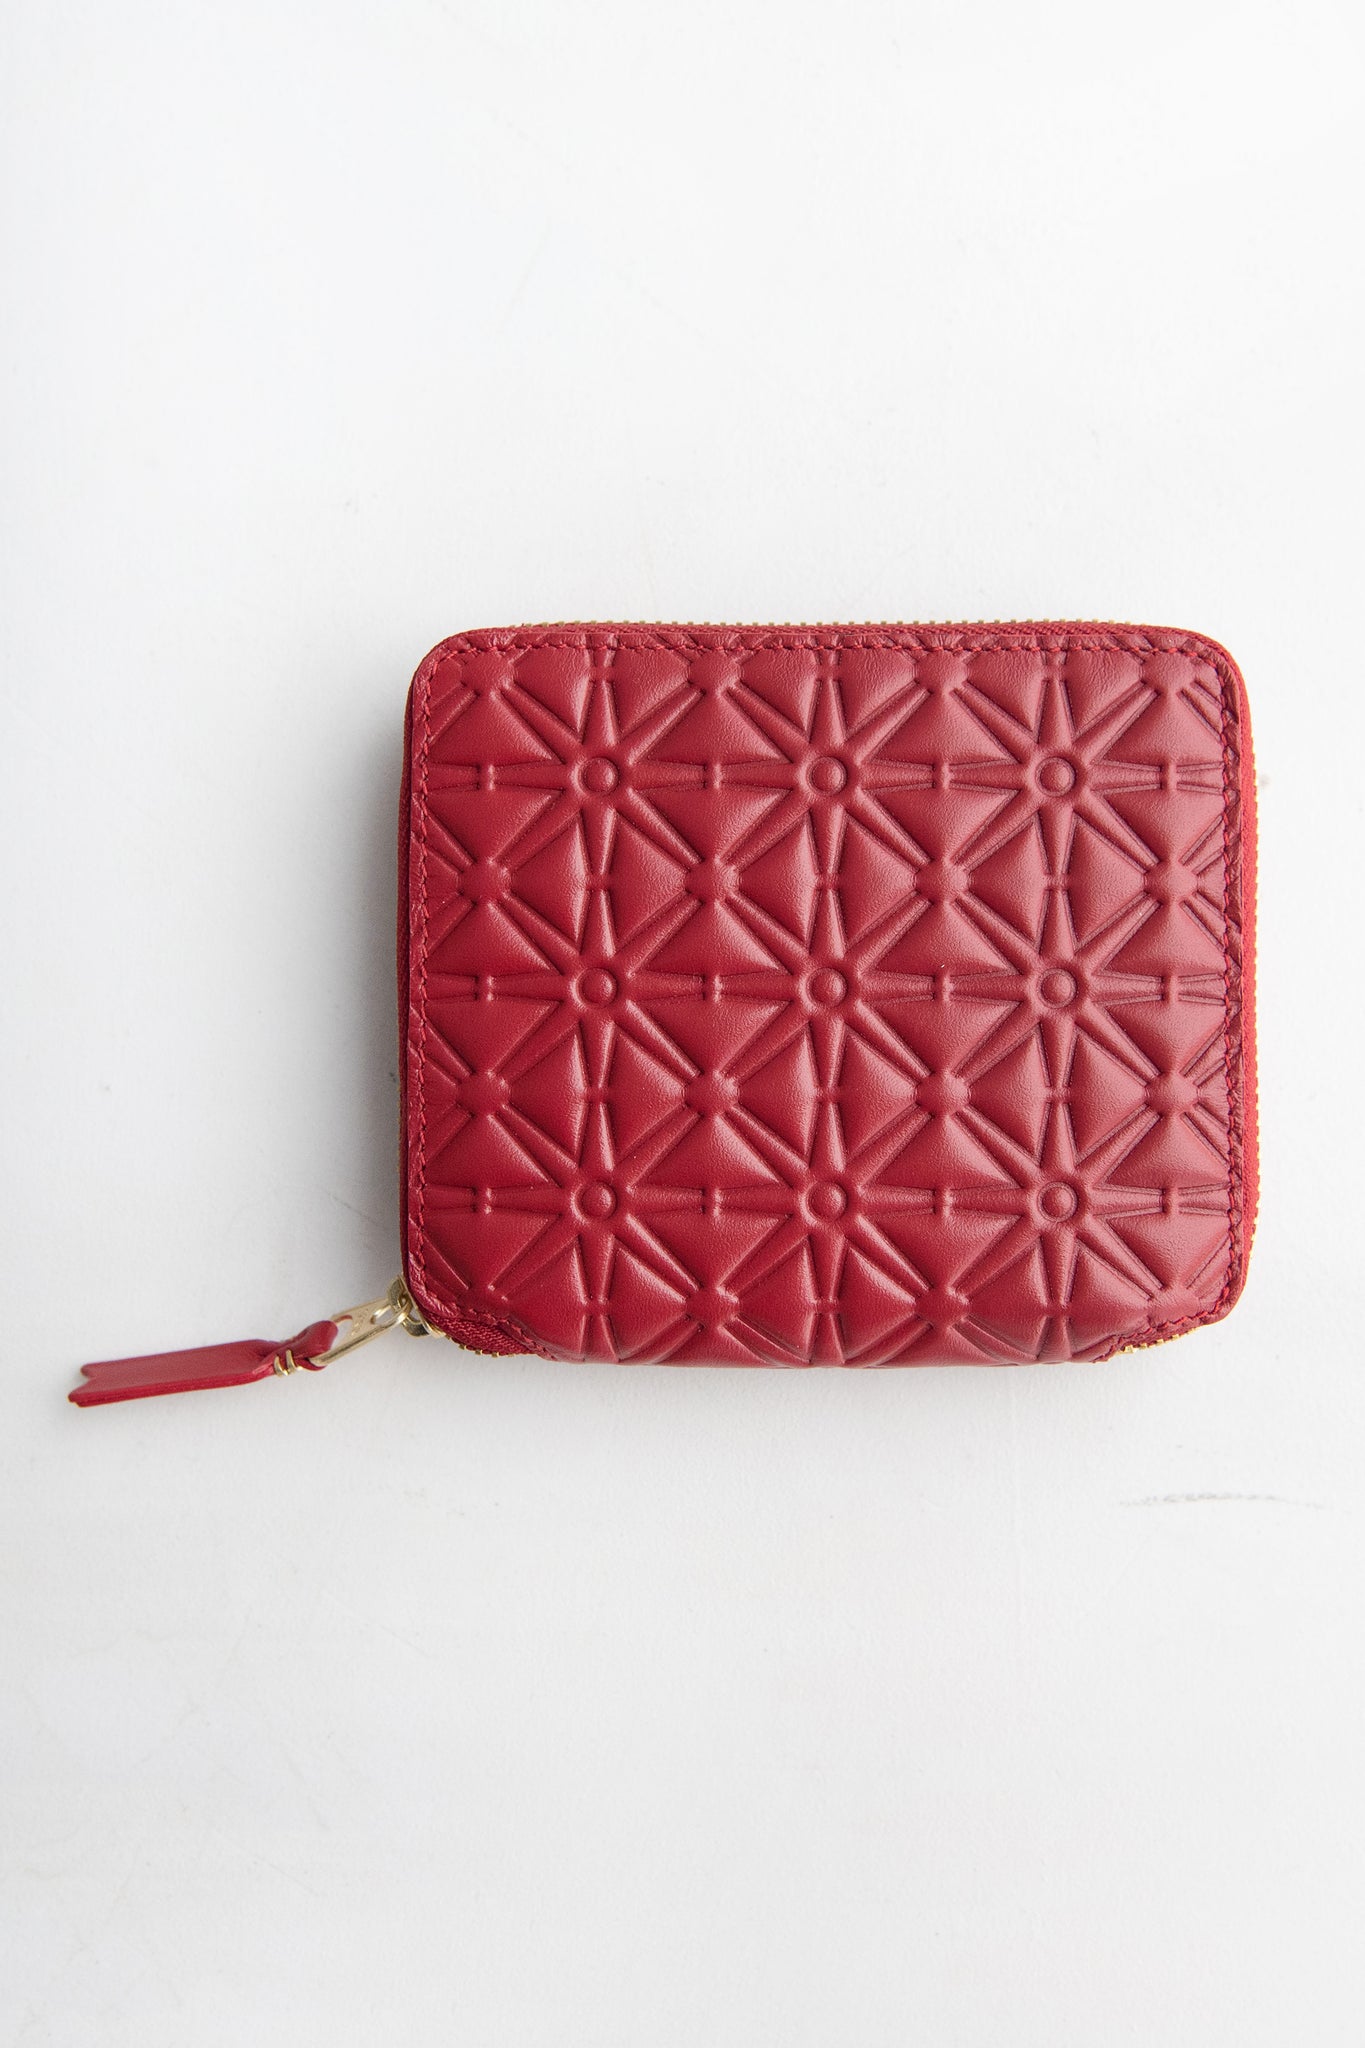 Comme des Garçons - Embossed Leather Wallet, Red